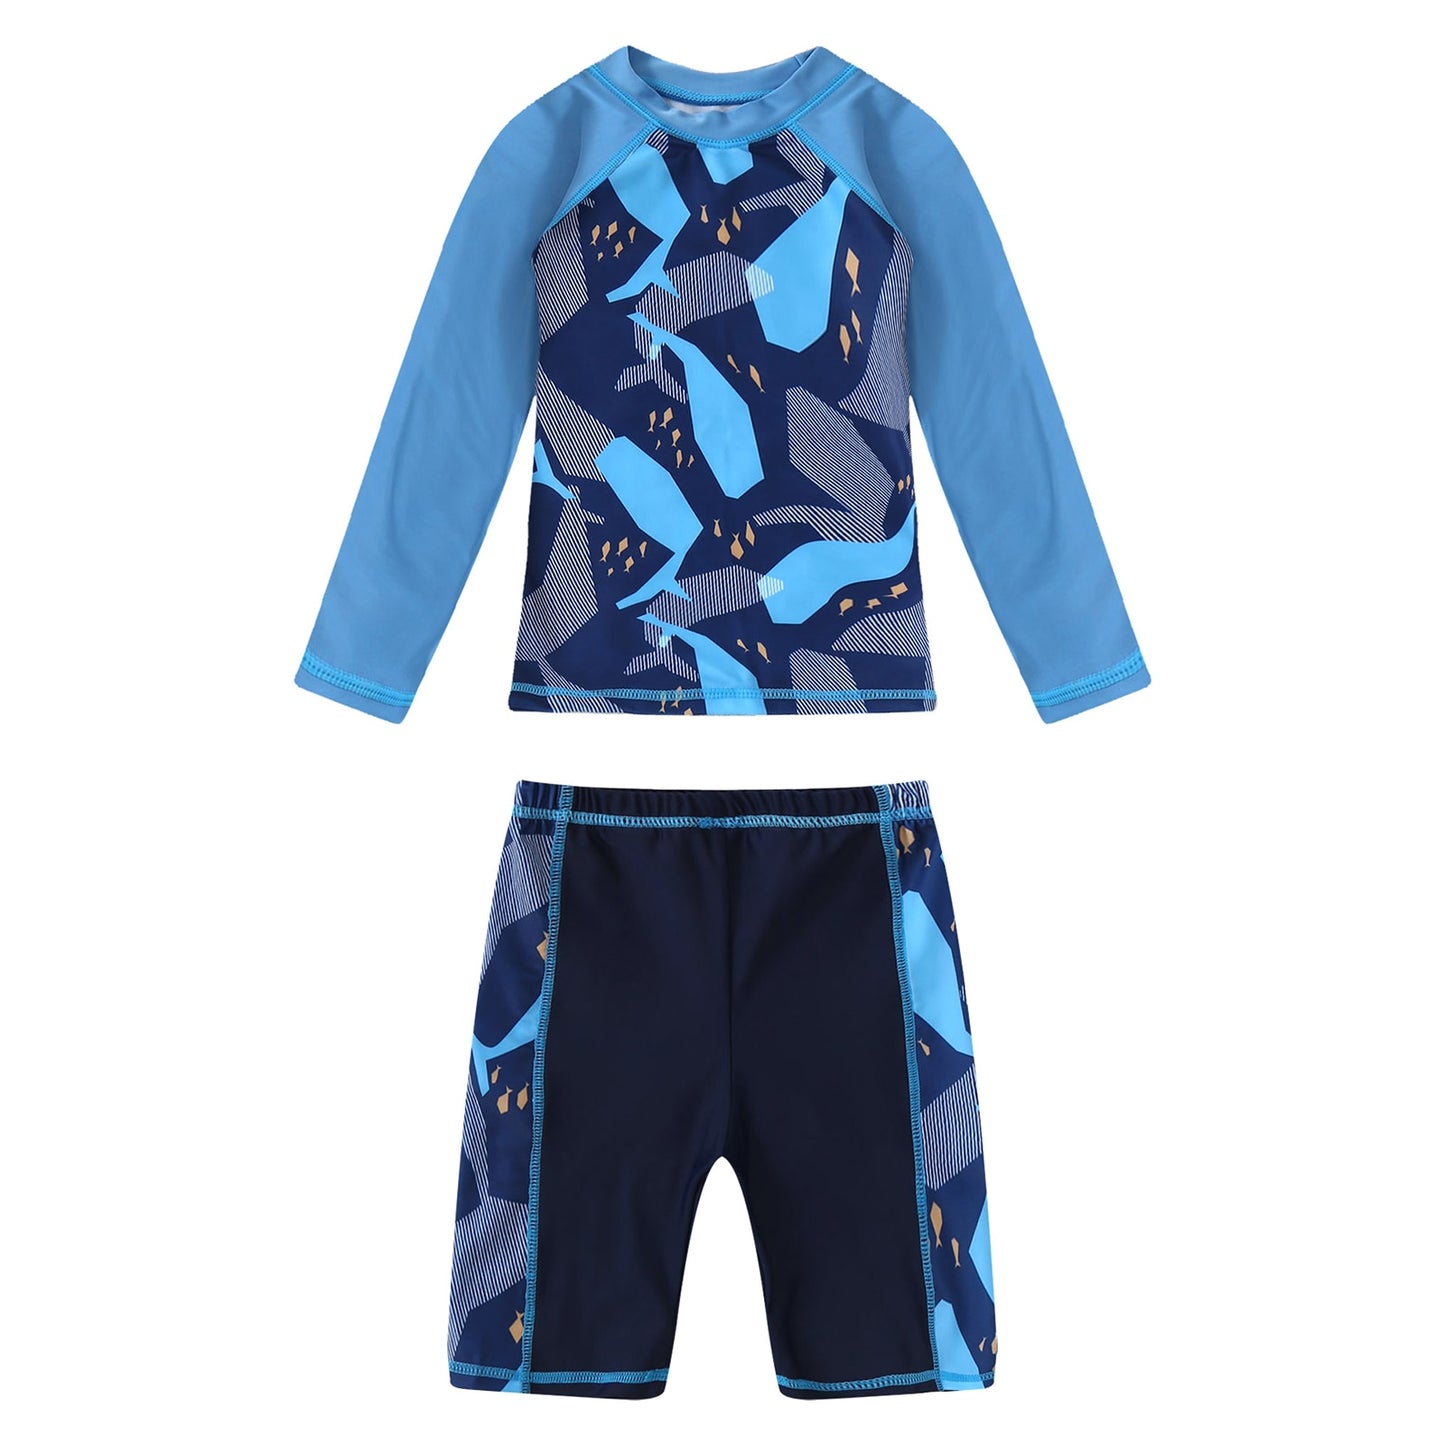 Kids Boys Swimming Suit Round Neck Long Sleeves Cartoon Shark Fish Waves Print Tops Shorts Swimming Set